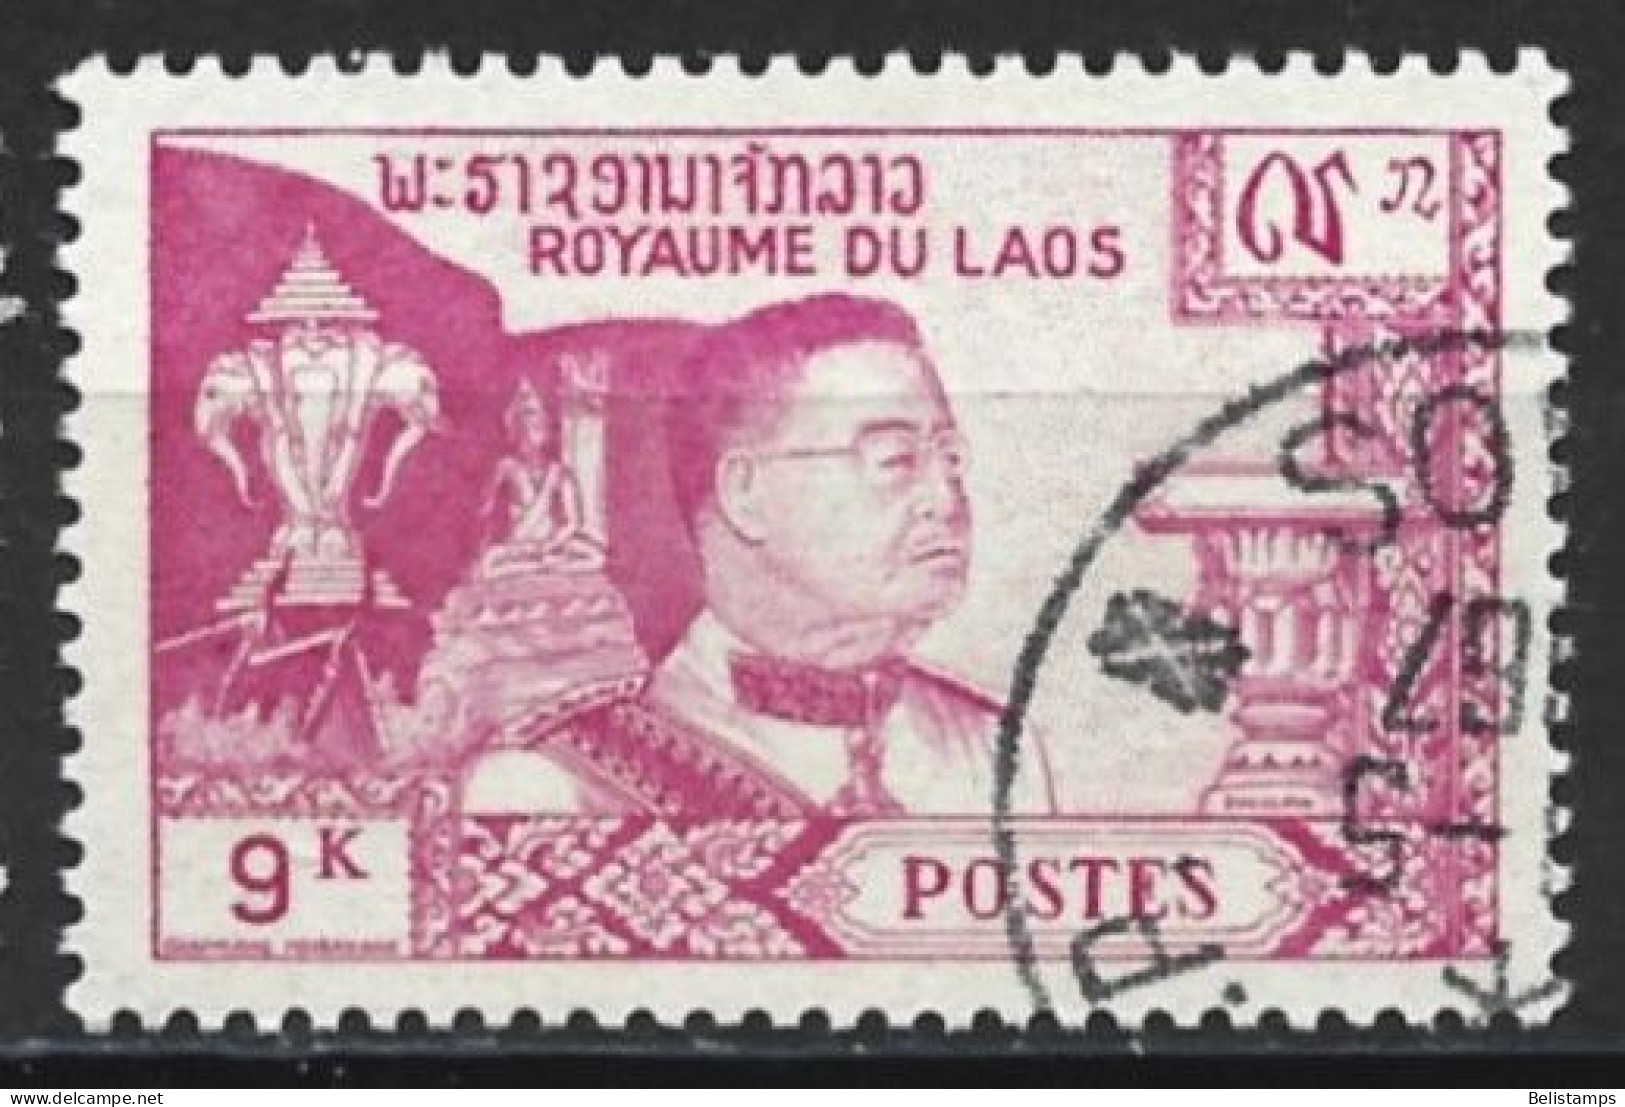 Laos 1959. Scott #54 (U) King Sisavang-Vong - Laos